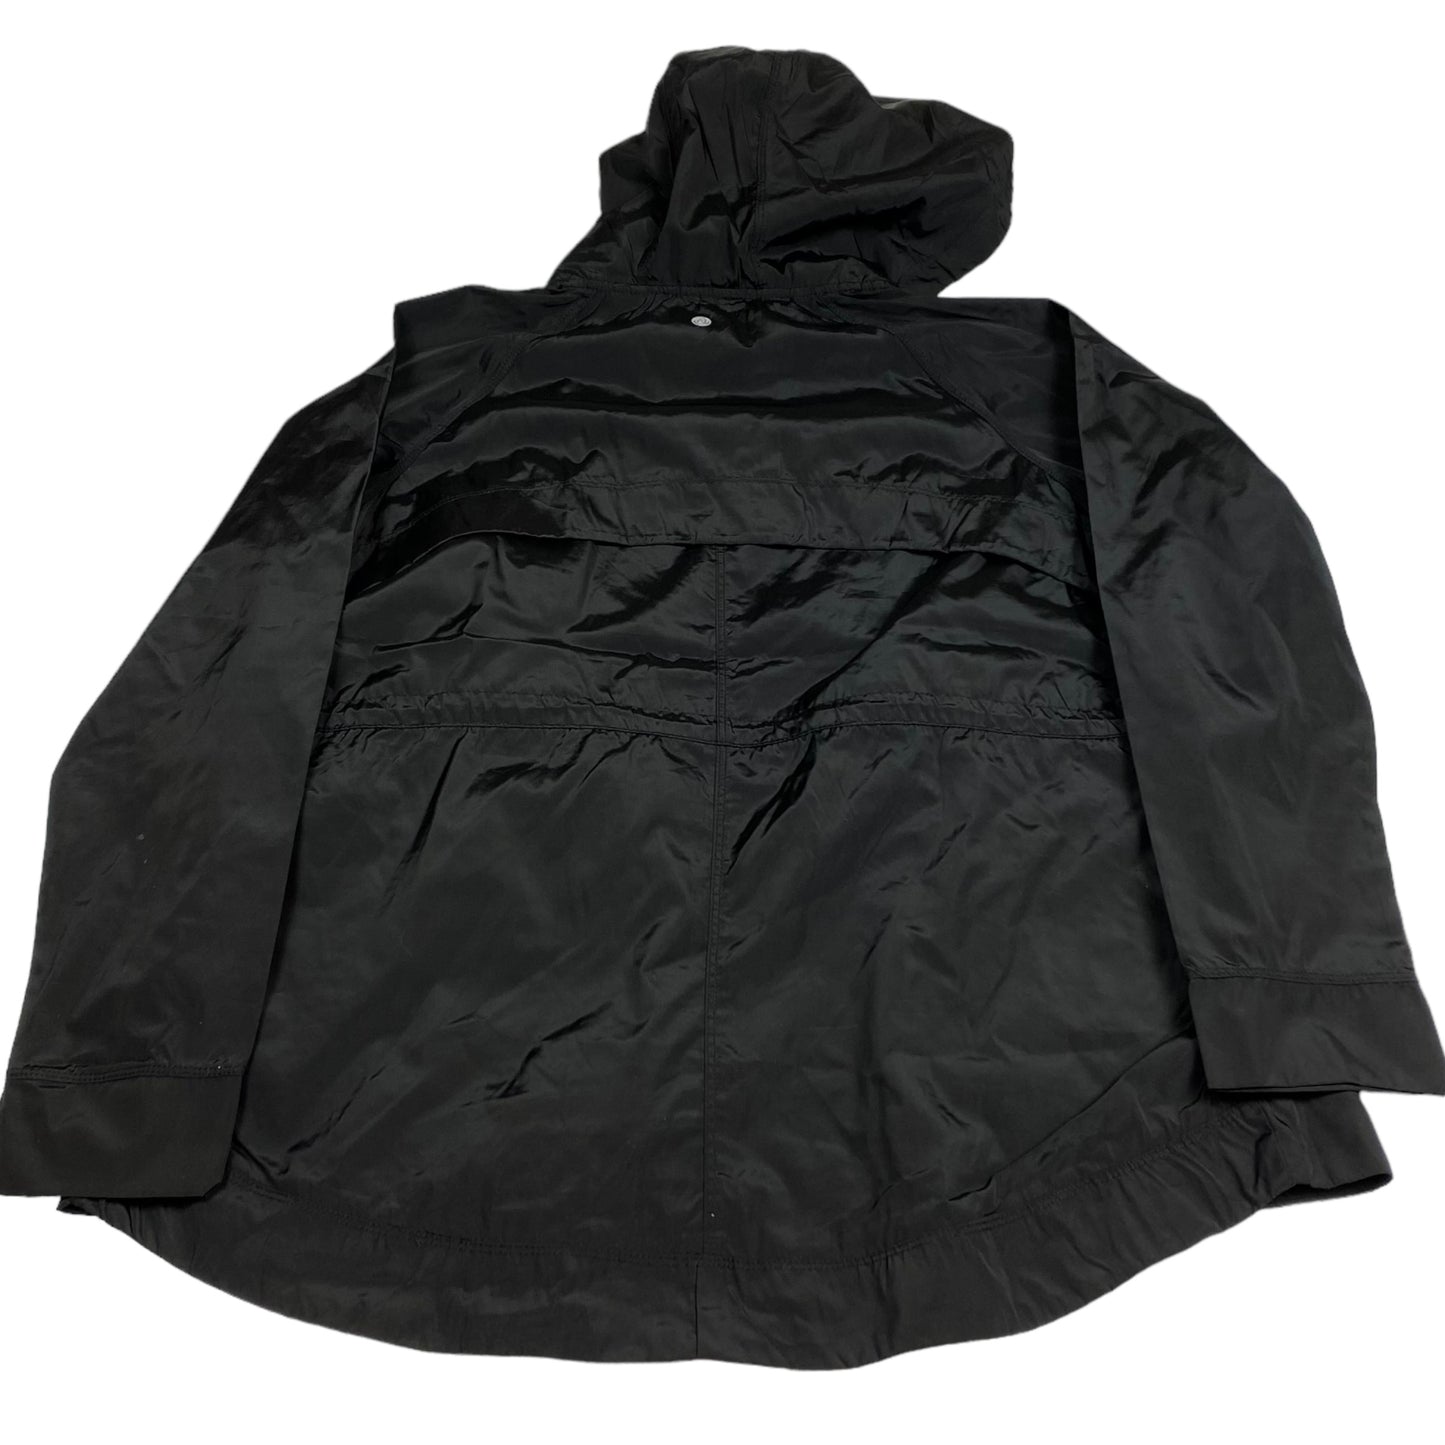 Coat Raincoat By Apana  Size: M